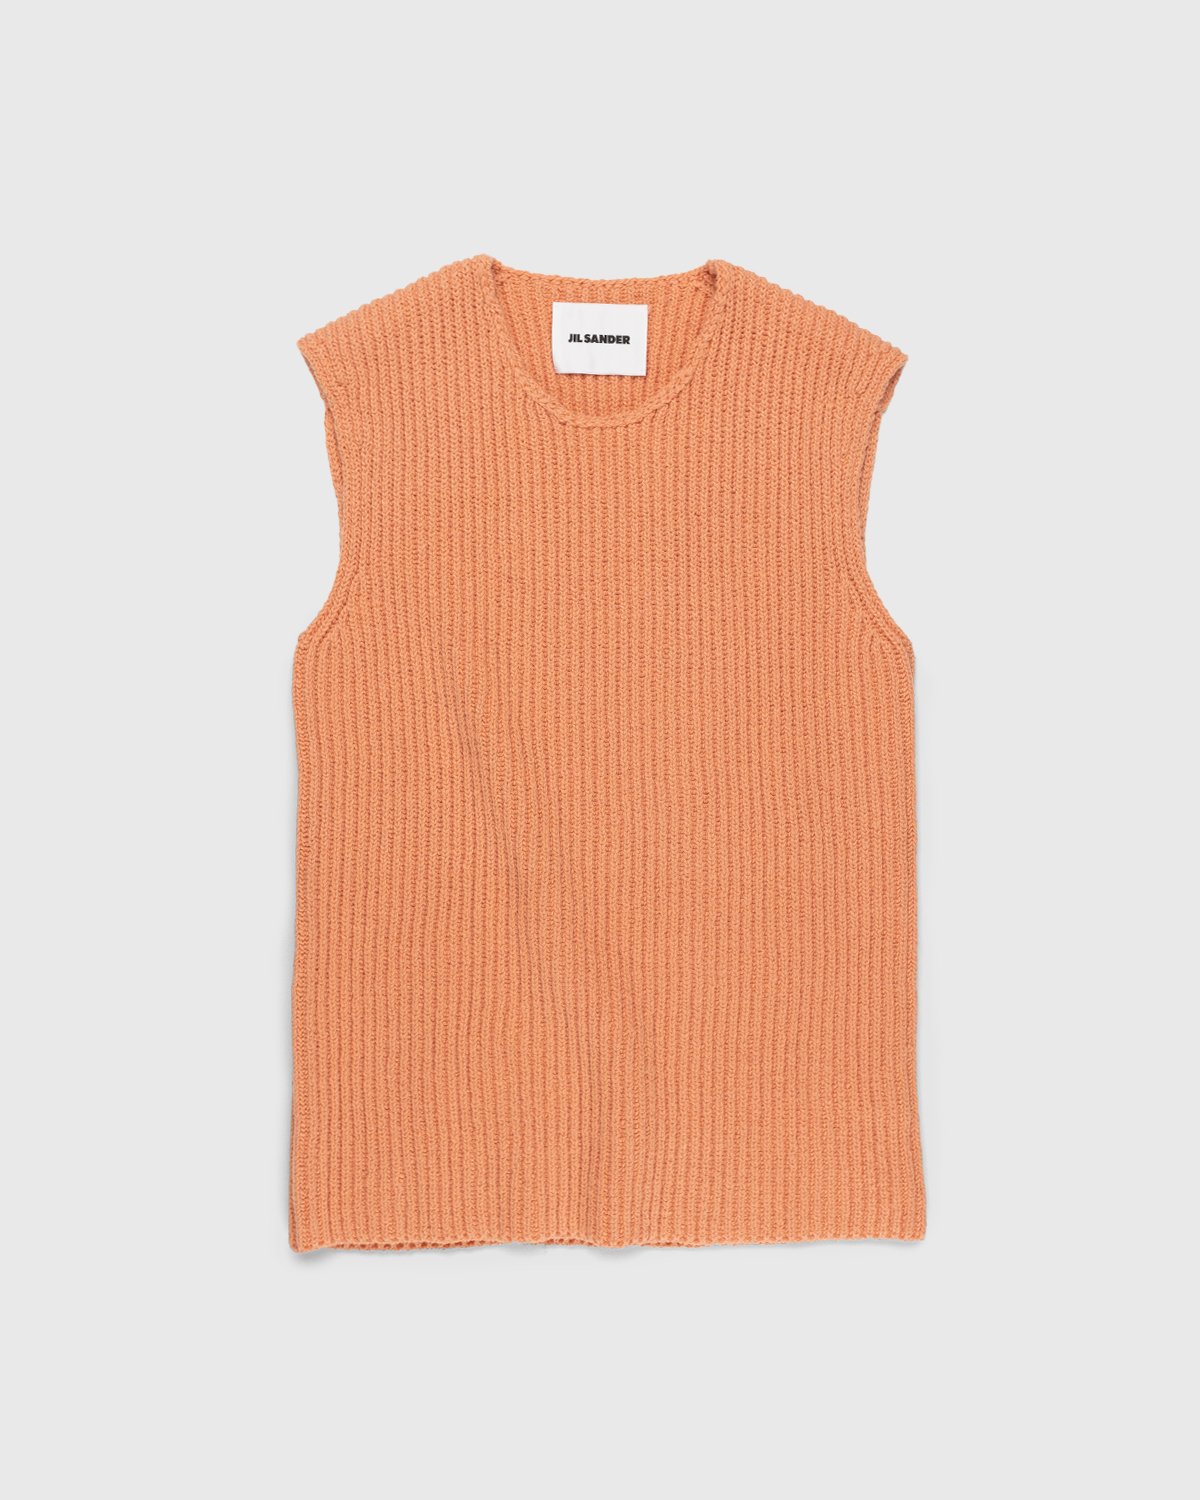 Jil Sander - Rib Knit Vest Orange - Clothing - Orange - Image 1